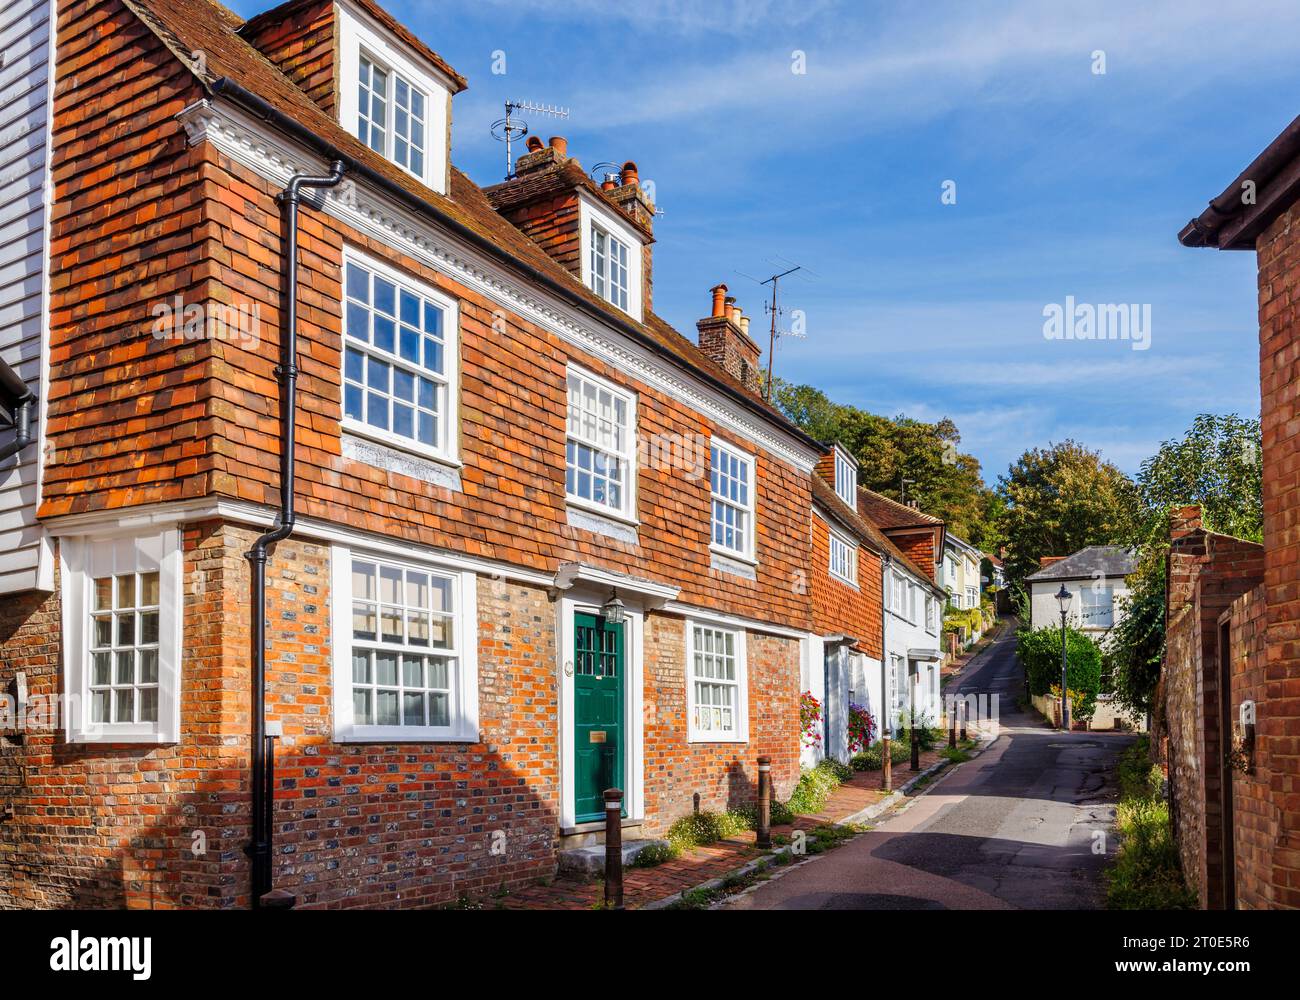 Edifici storici in stile locale, case e cottage a Chapel Hill a Lewes, la storica contea di East Sussex, Inghilterra sud-orientale Foto Stock